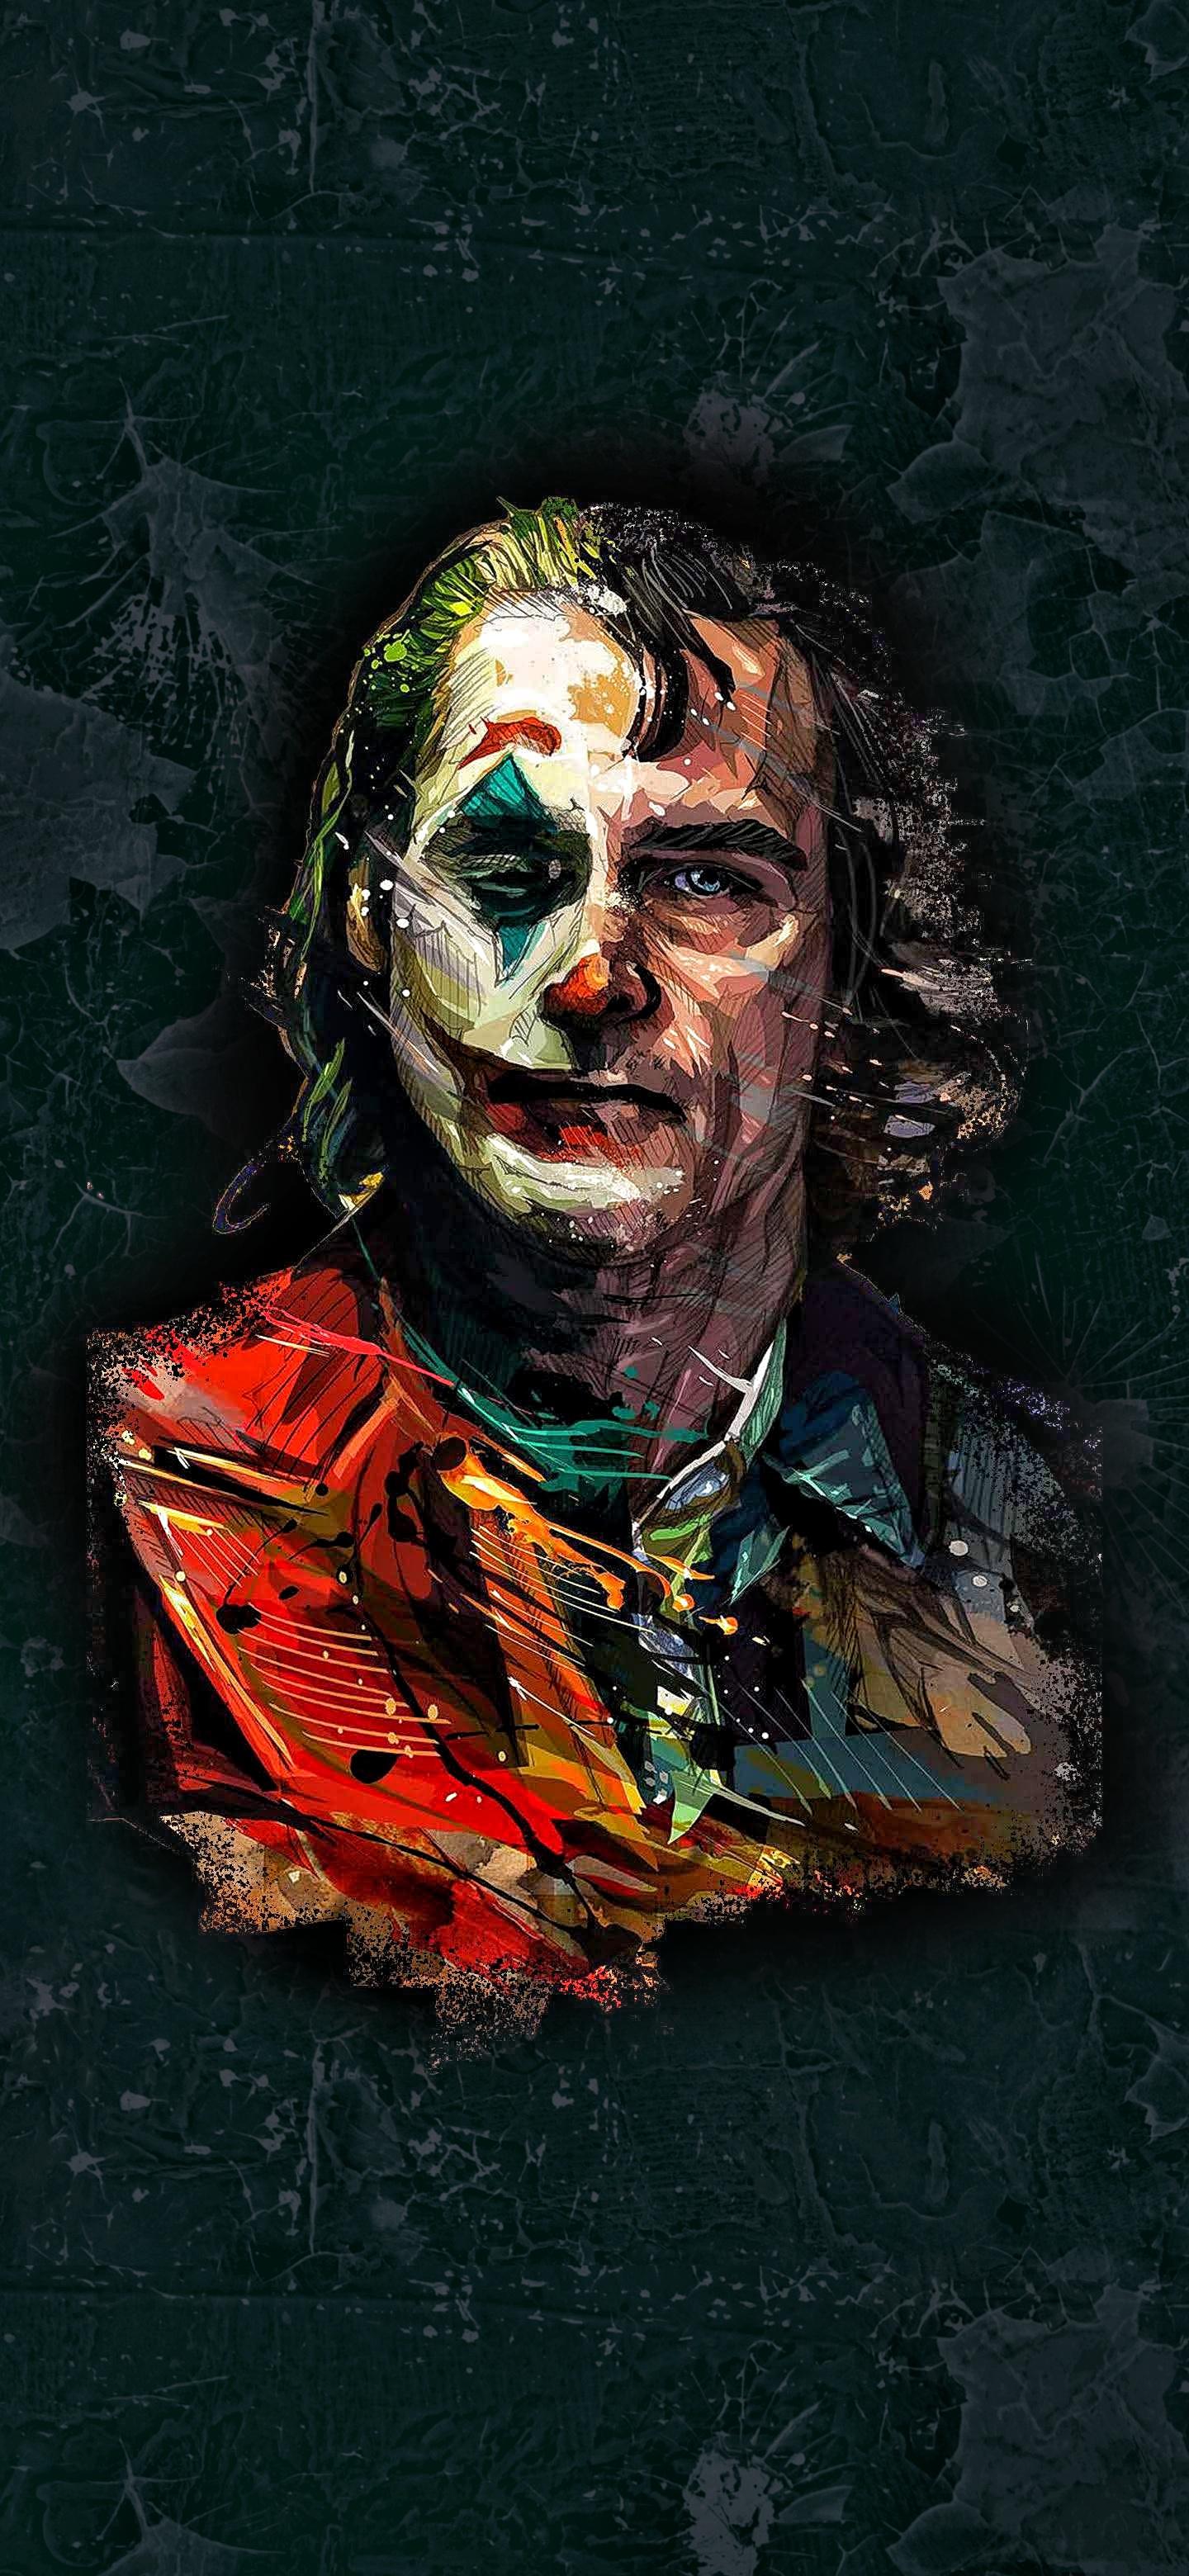 Joker art wallpapers